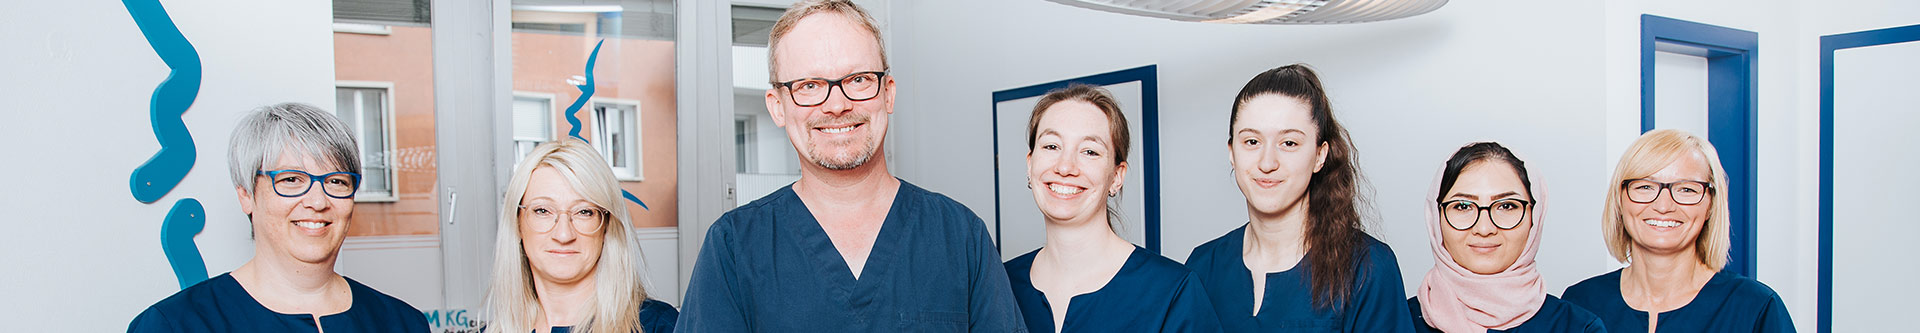 Kieferchirurg Schweinfurt, Dr. Georg Strehl